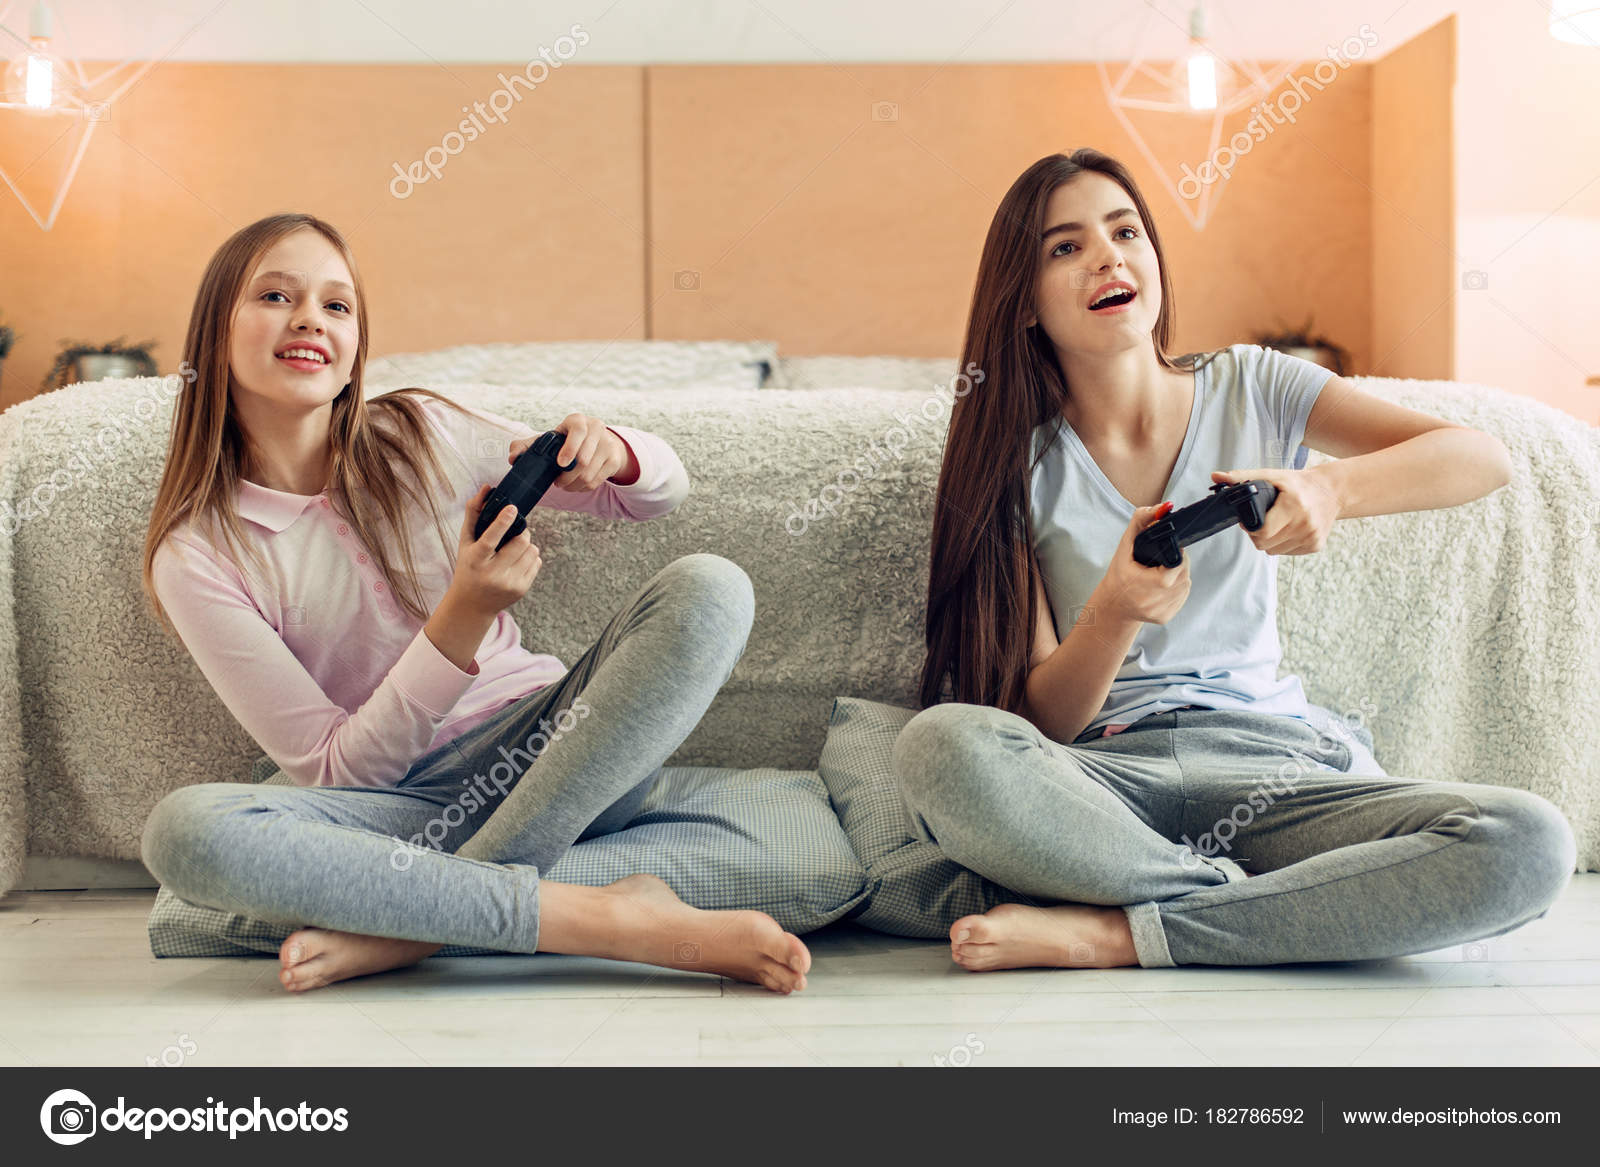 depositphotos_182786592-stock-photo-two-teenage-sisters-playing-video.jpg